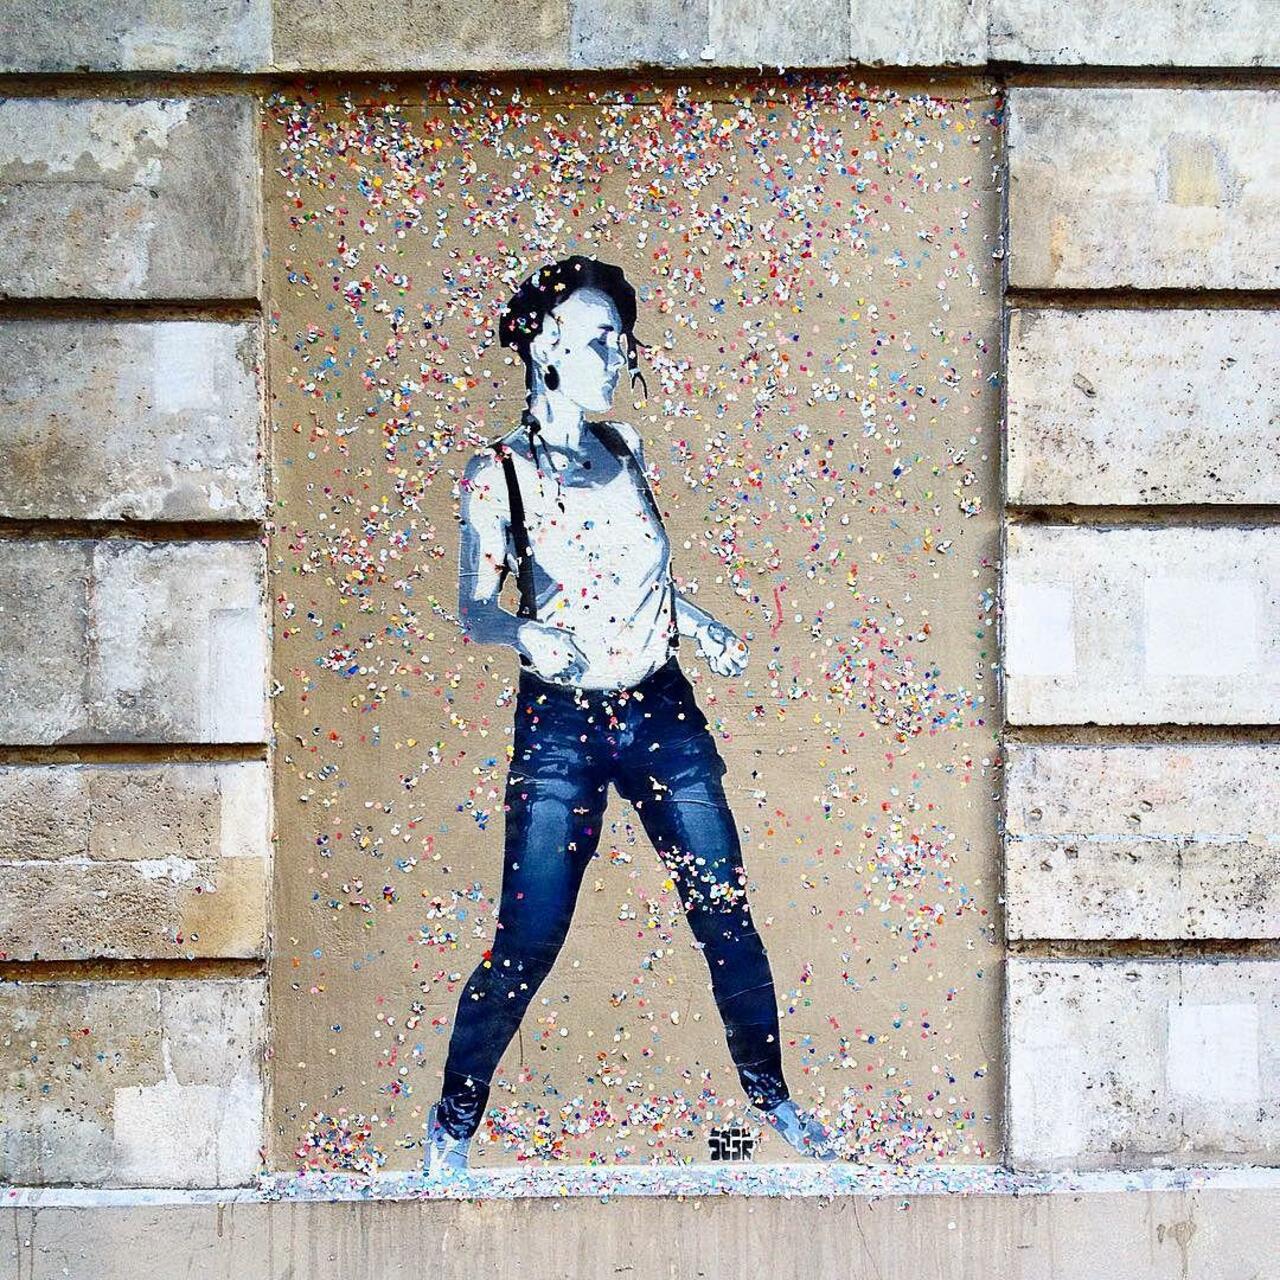 RT @circumjacent_fr: #Paris #graffiti photo by @regrinder http://ift.tt/1iTprk8 #StreetArt http://t.co/BMJJ4SsZJs